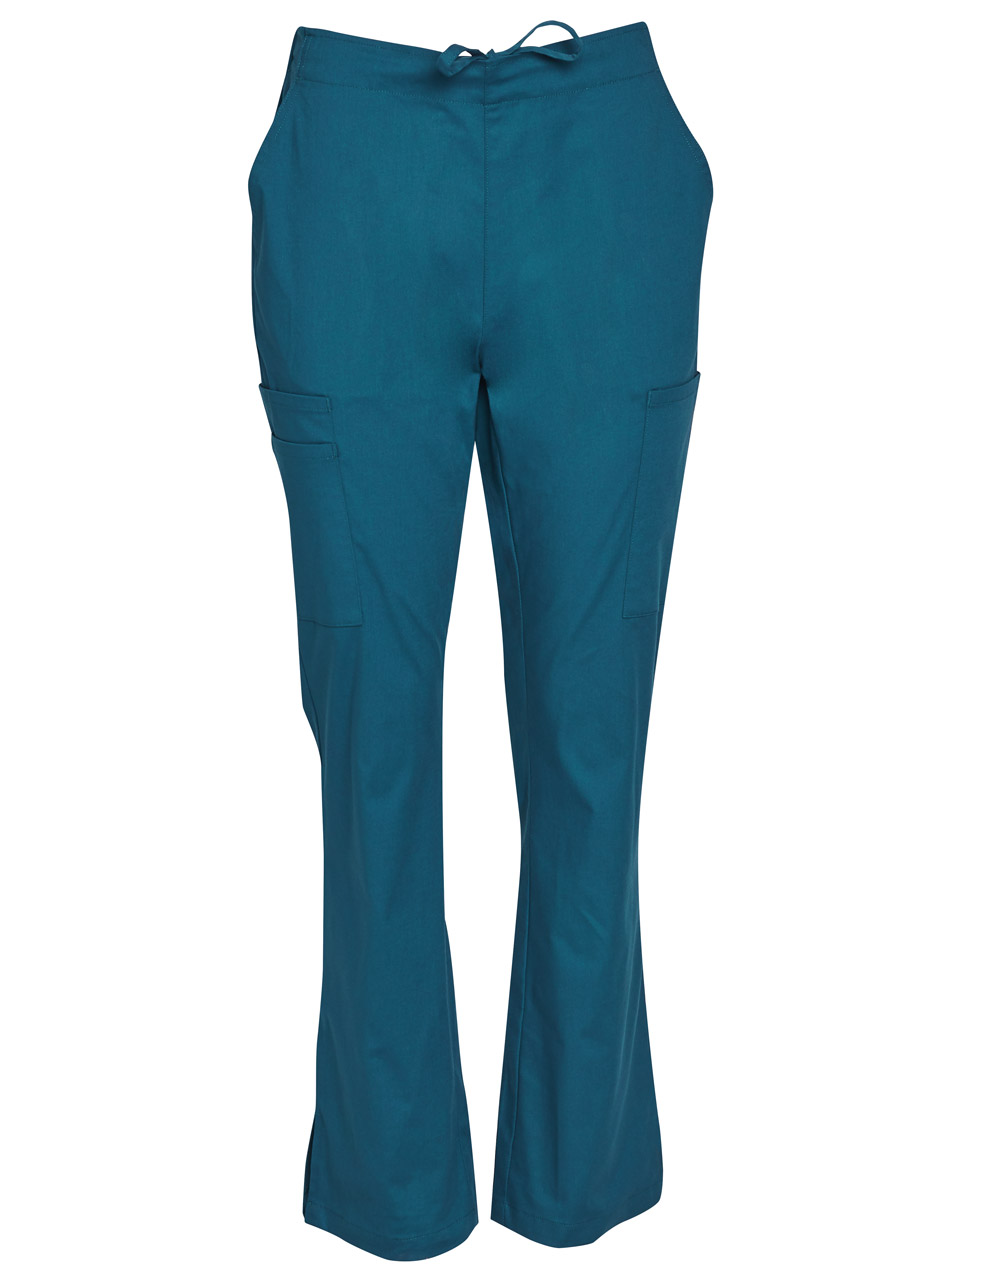 Get Teal Ladies Semi-Elastic Waist Tie Solid Colour Scrub Pants in Australia